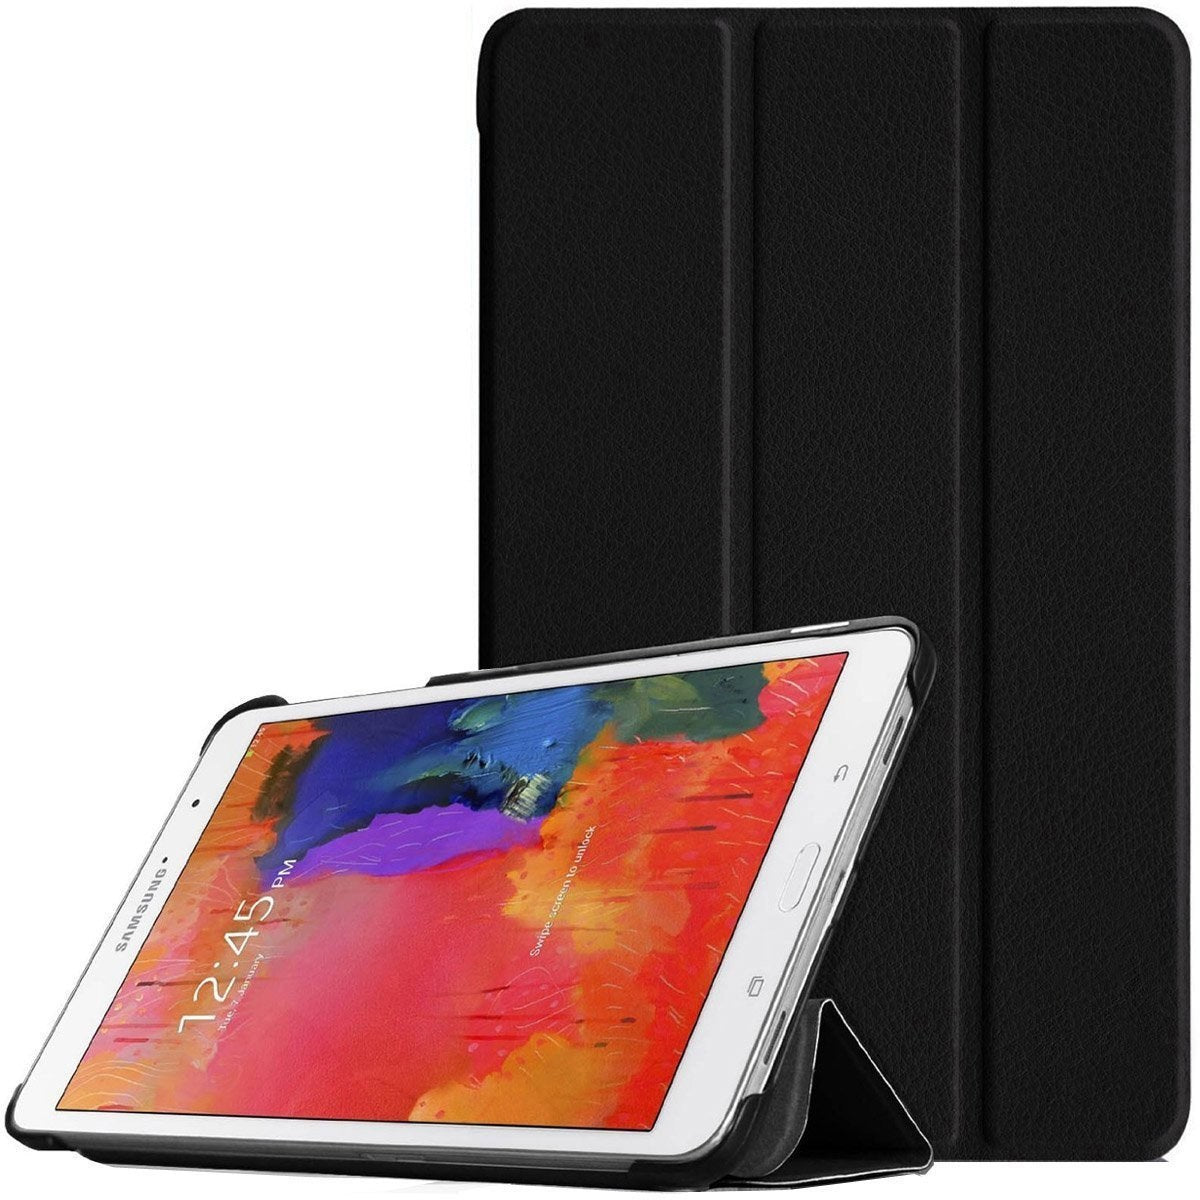 Capa 3 Dobras Smart Case Trifold Slim para Samsung Galaxy Tab Pro 8.4 T320 - Multi4you®